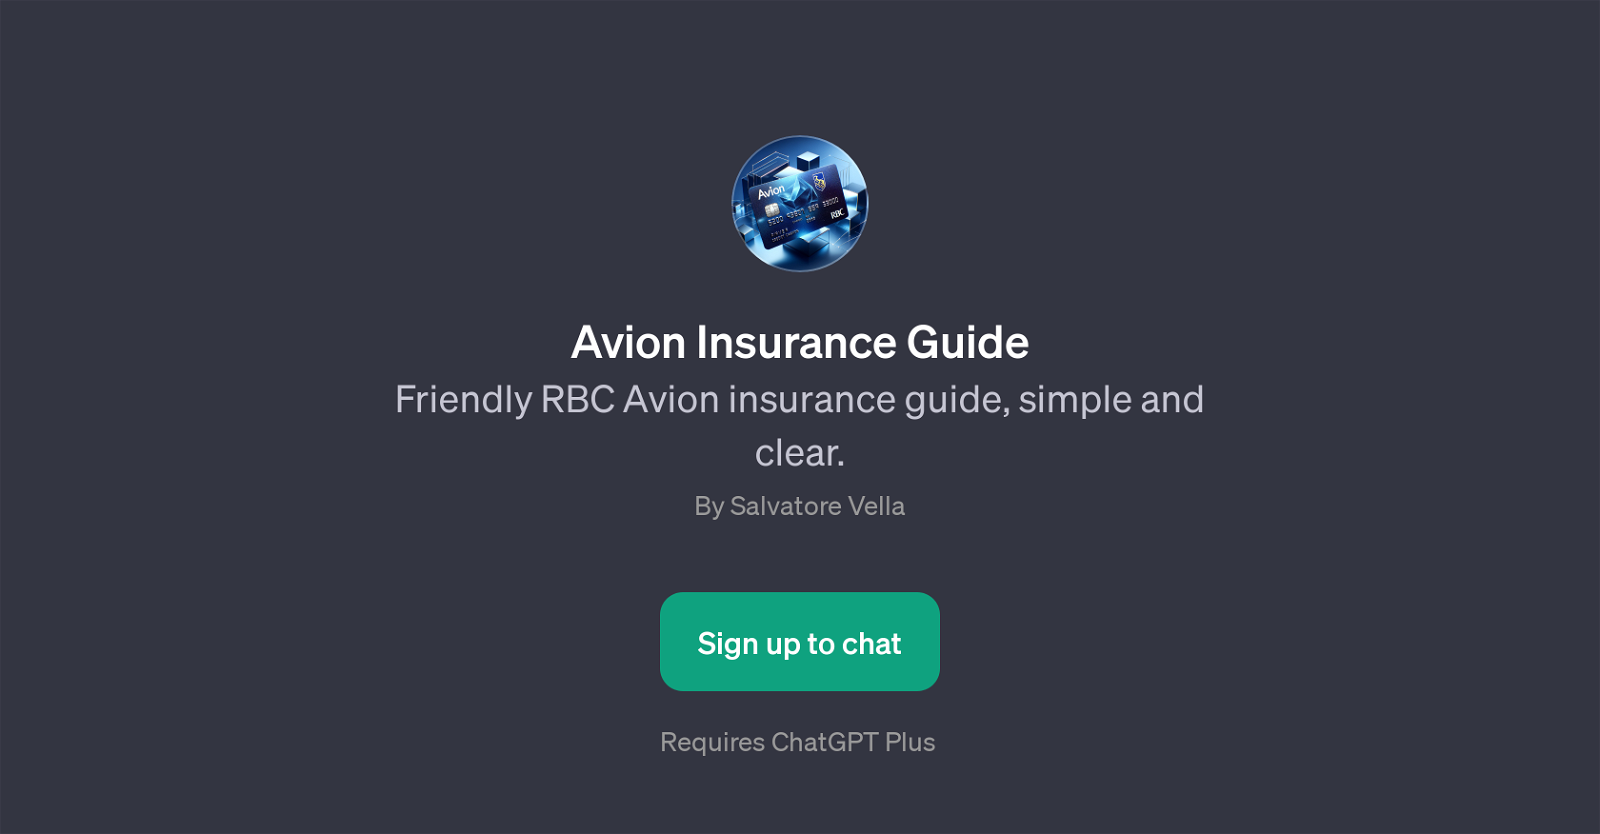 Avion Insurance Guide website